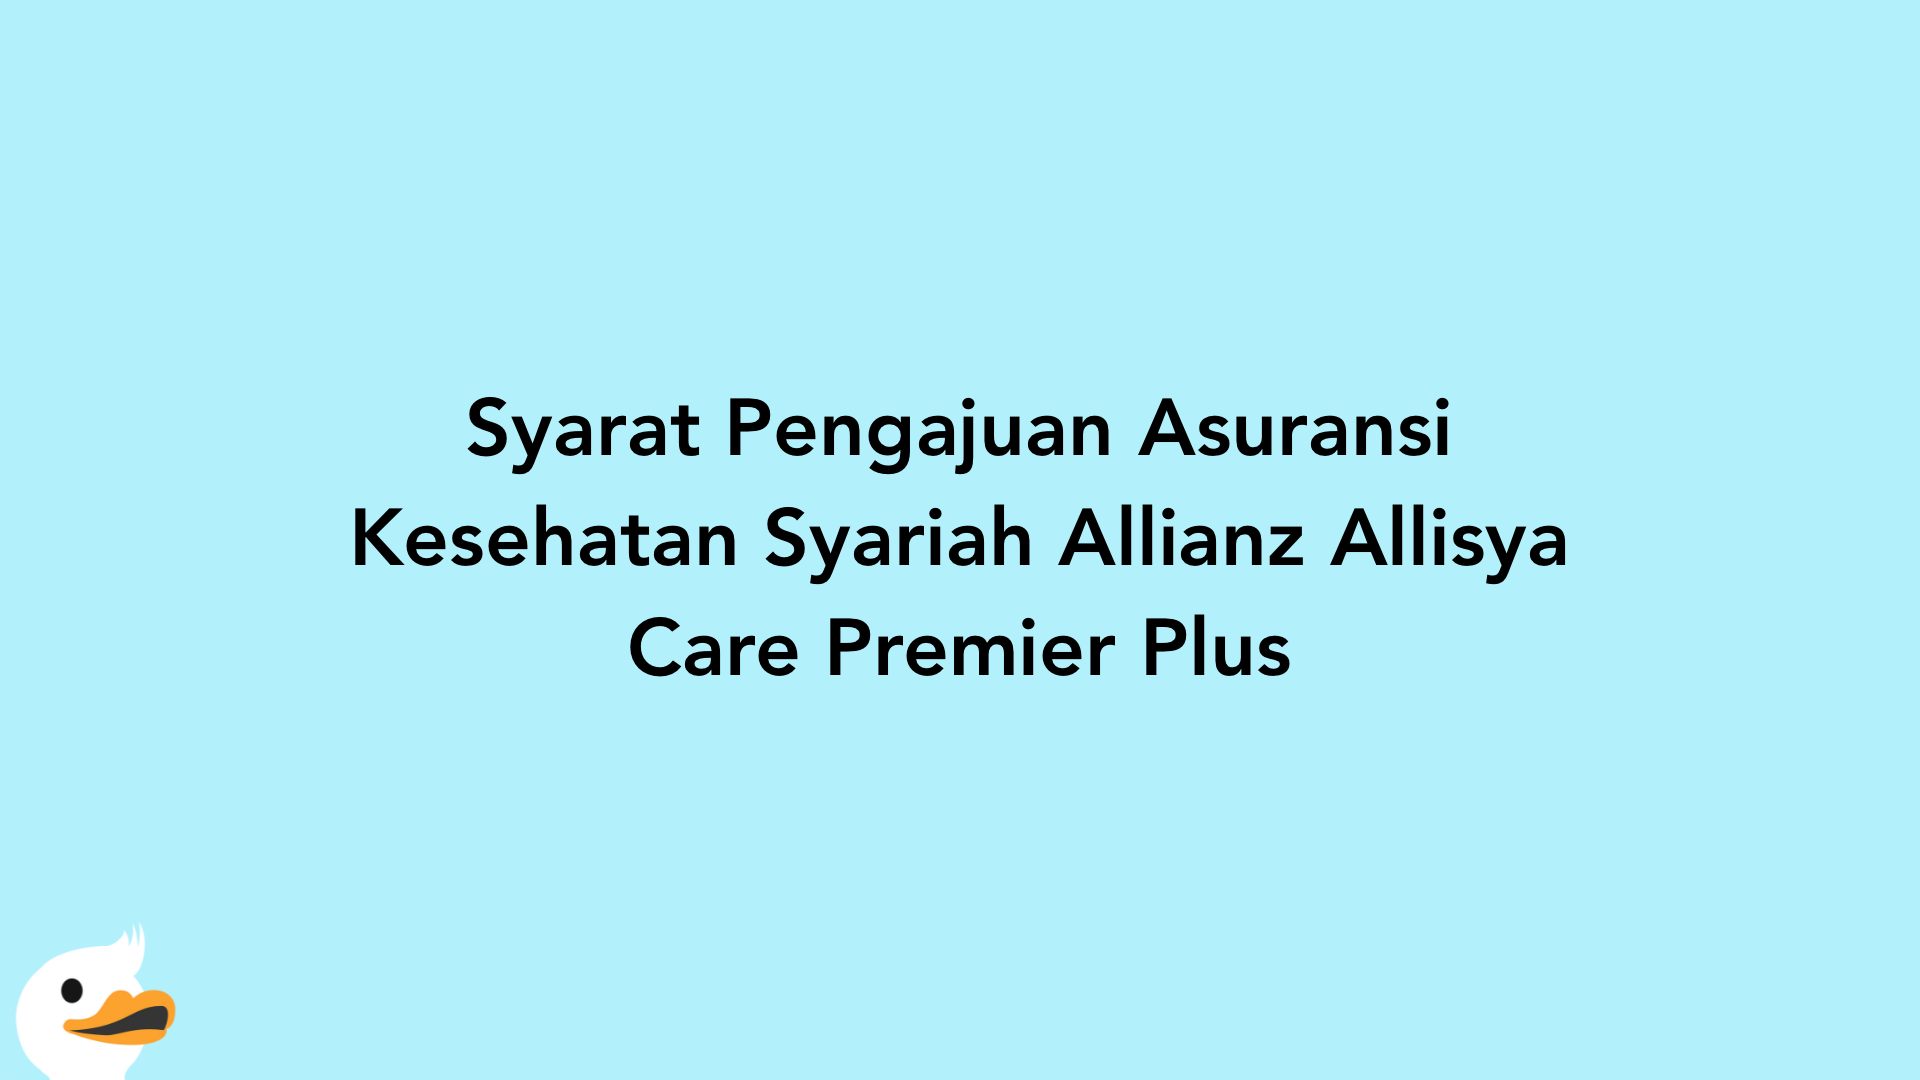 Syarat Pengajuan Asuransi Kesehatan Syariah Allianz Allisya Care Premier Plus